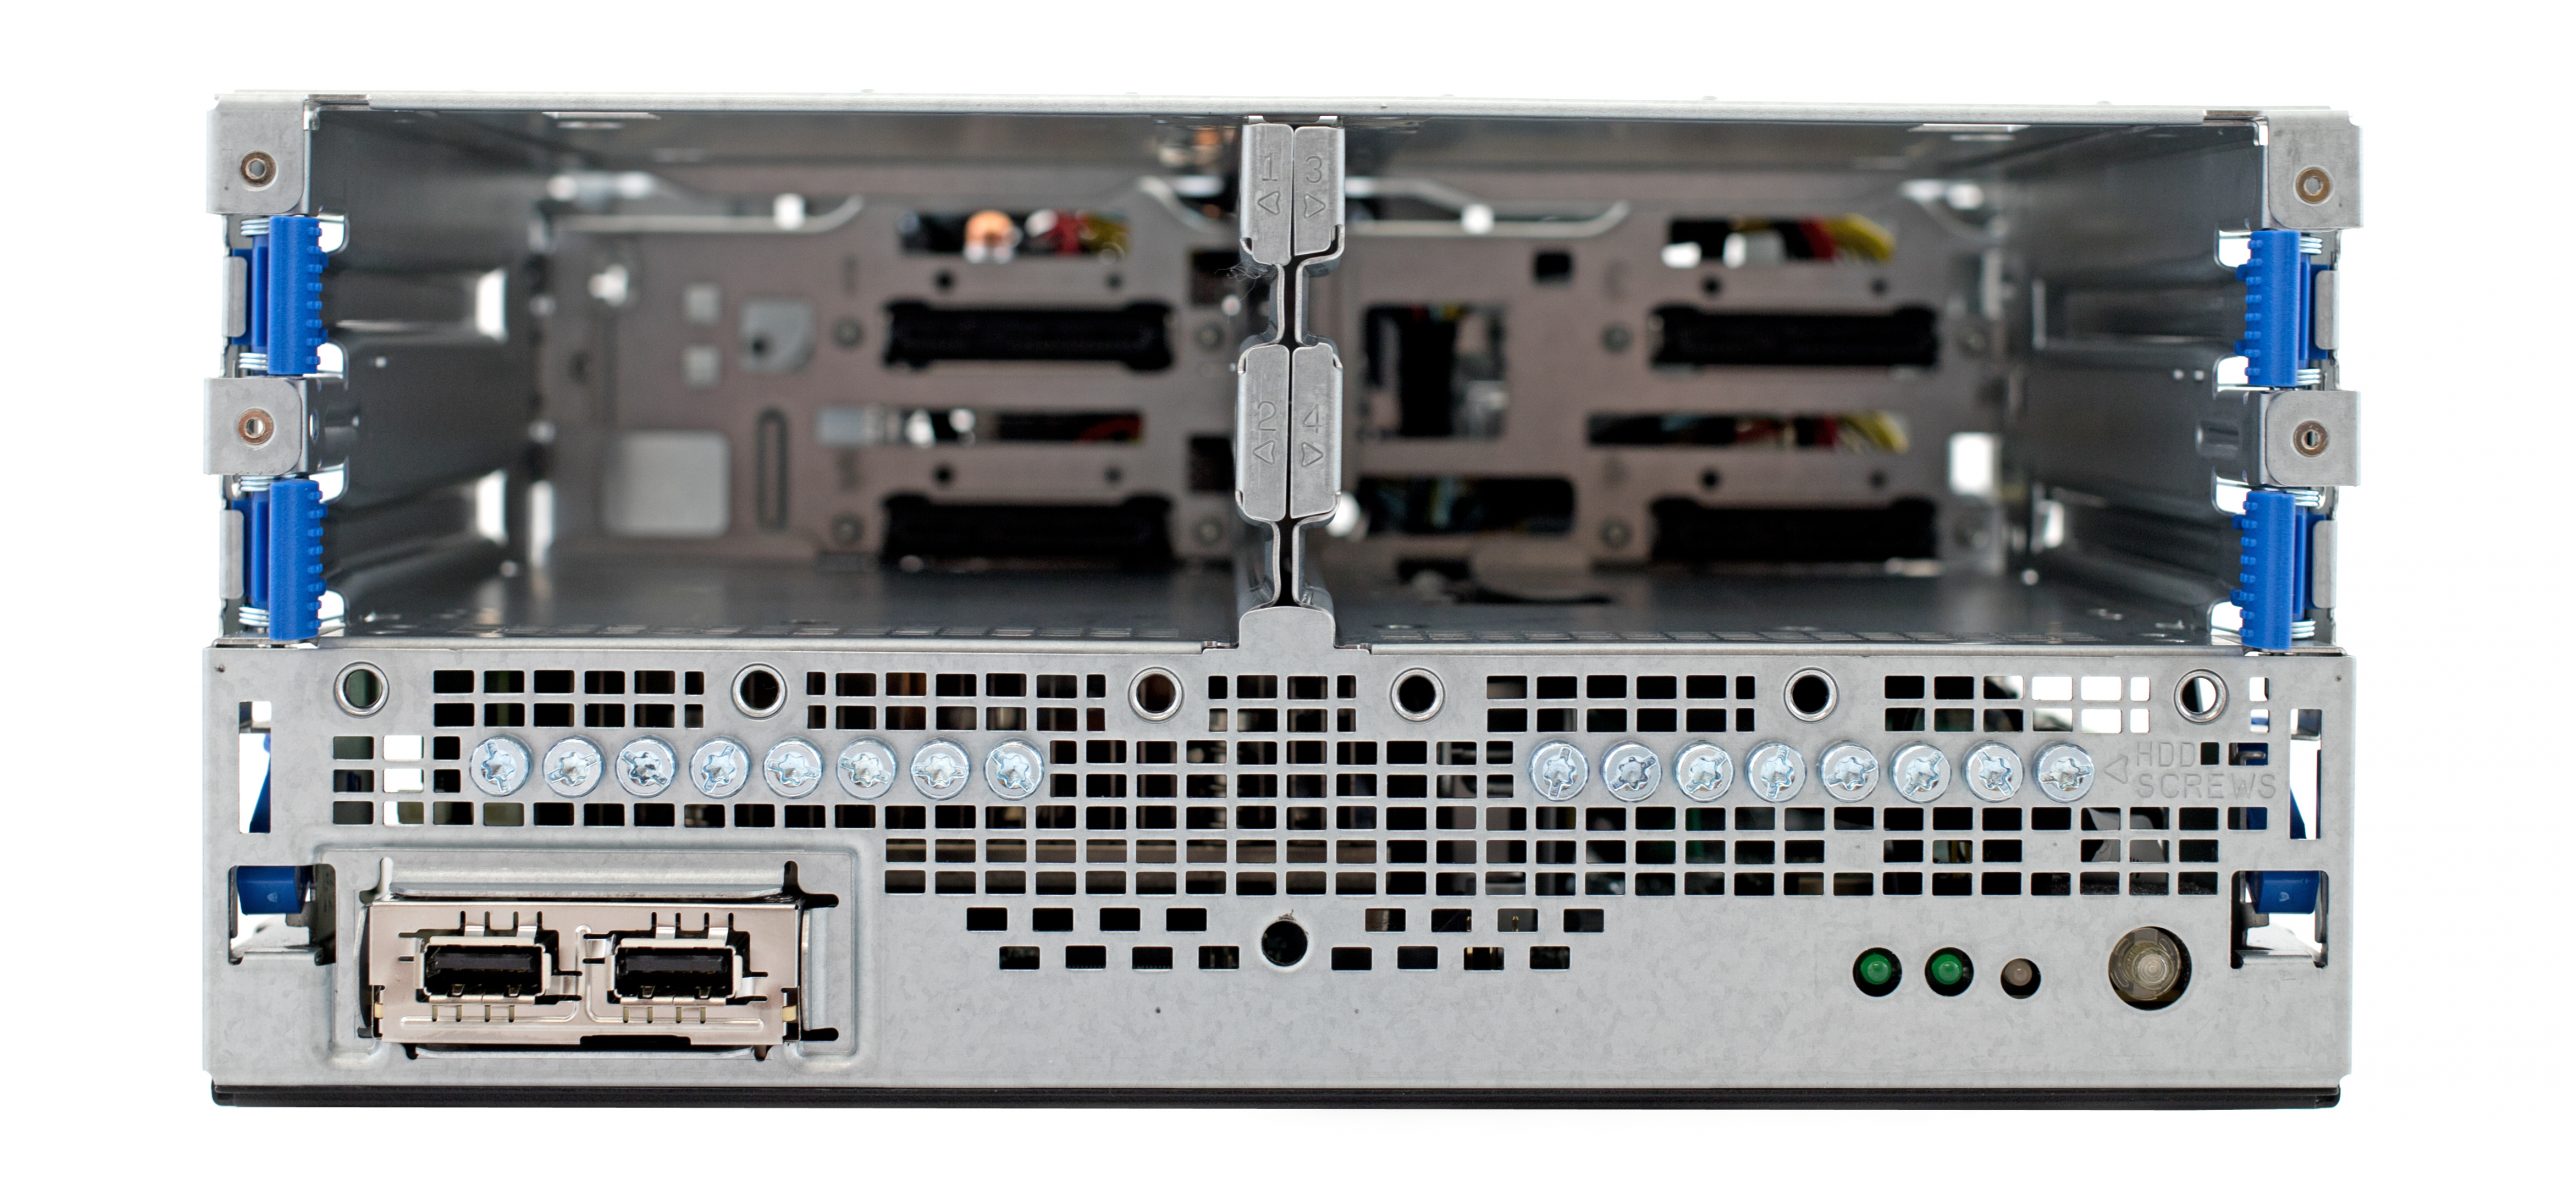 HPE ProLiant MicroServer Gen10 Plus Review - StorageReview.com